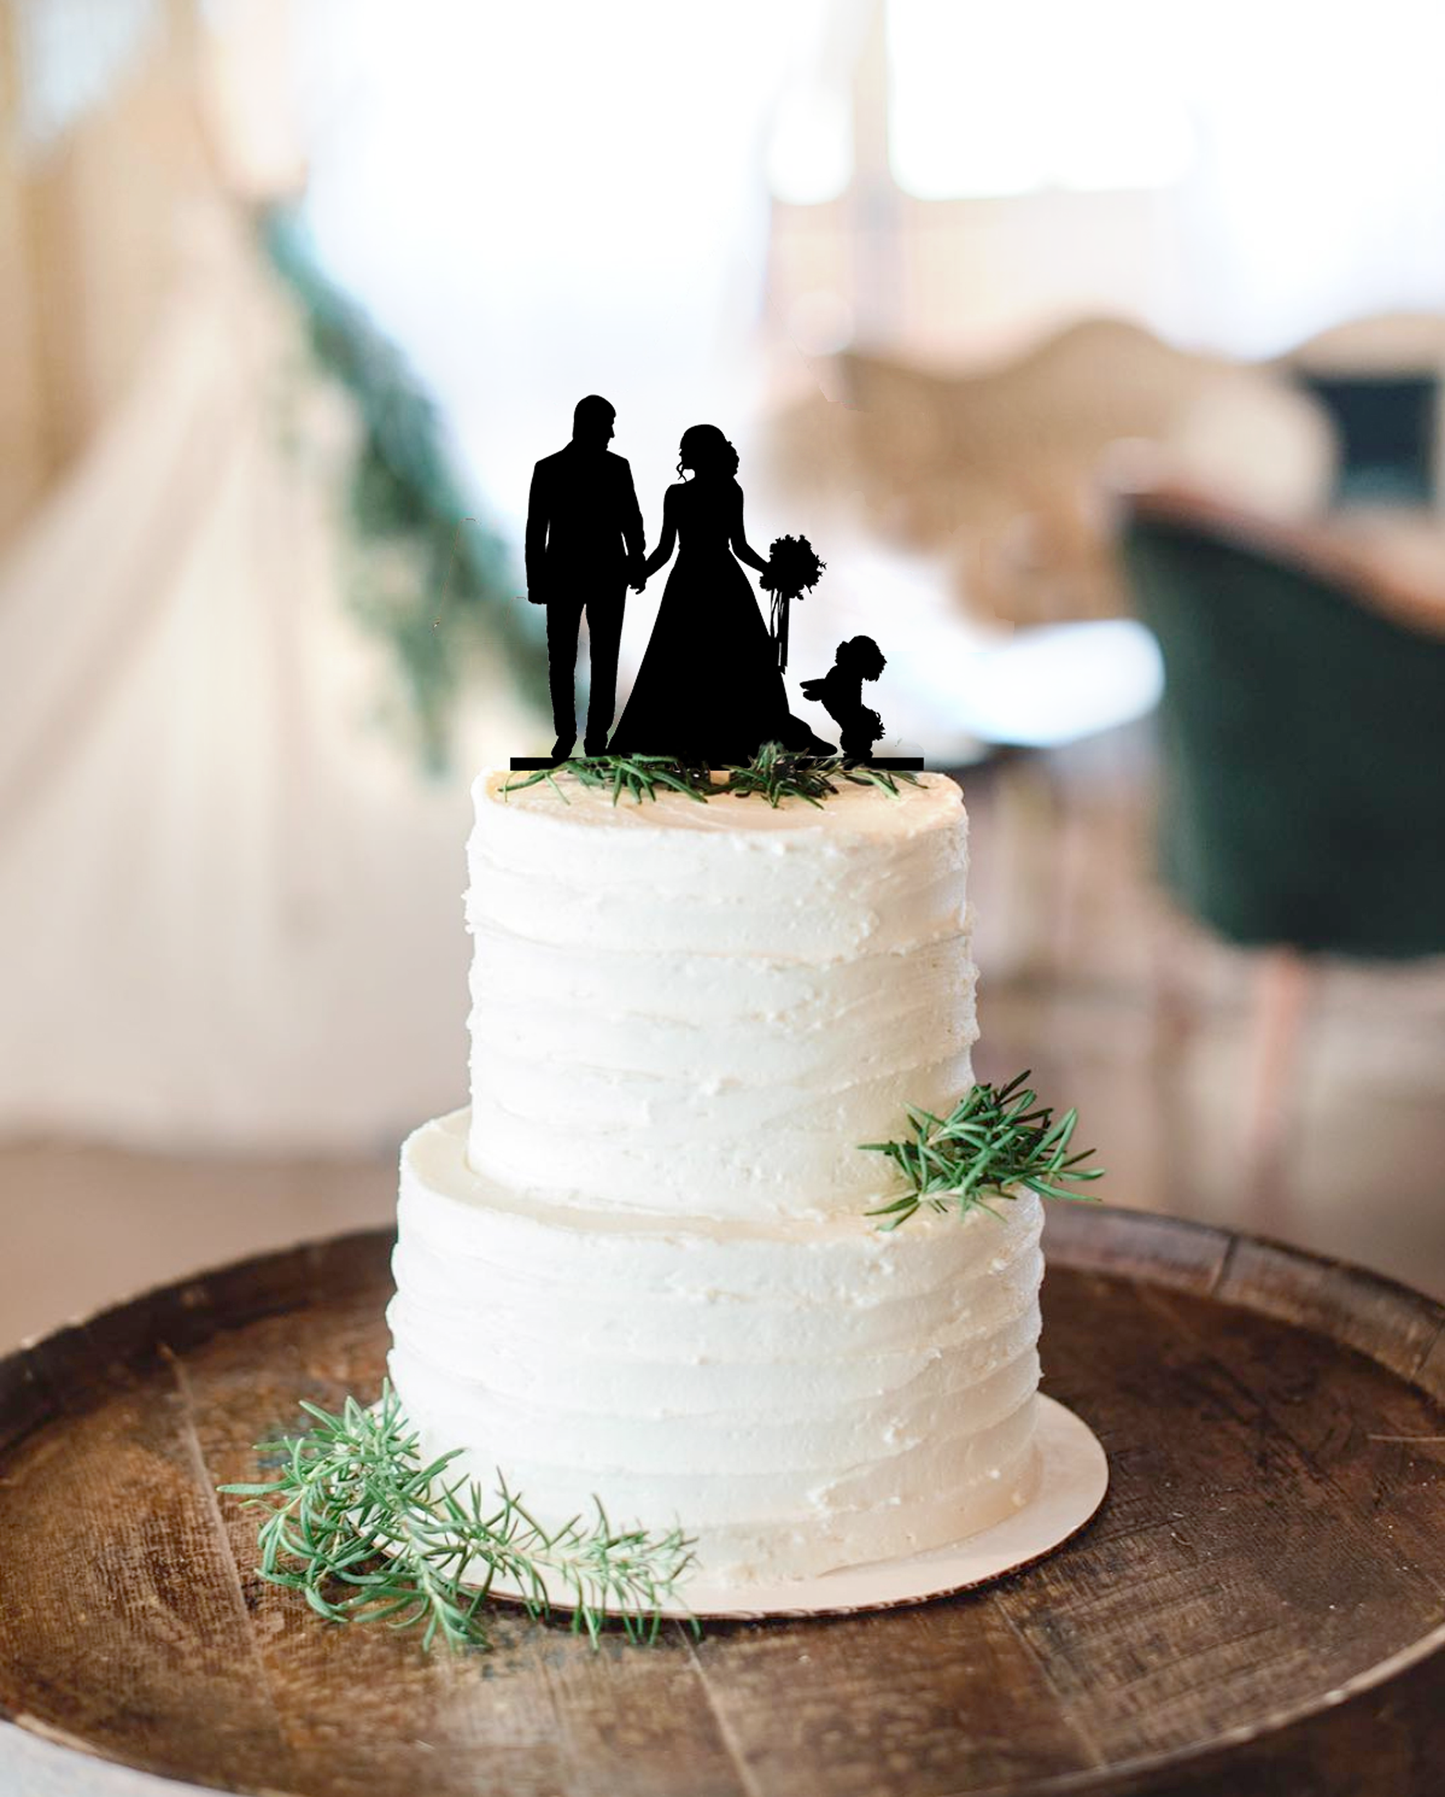 Dog Wedding Cake Topper Rare Breeds Custom Couple Silhouette Dog Pet Wedding Cake Topper